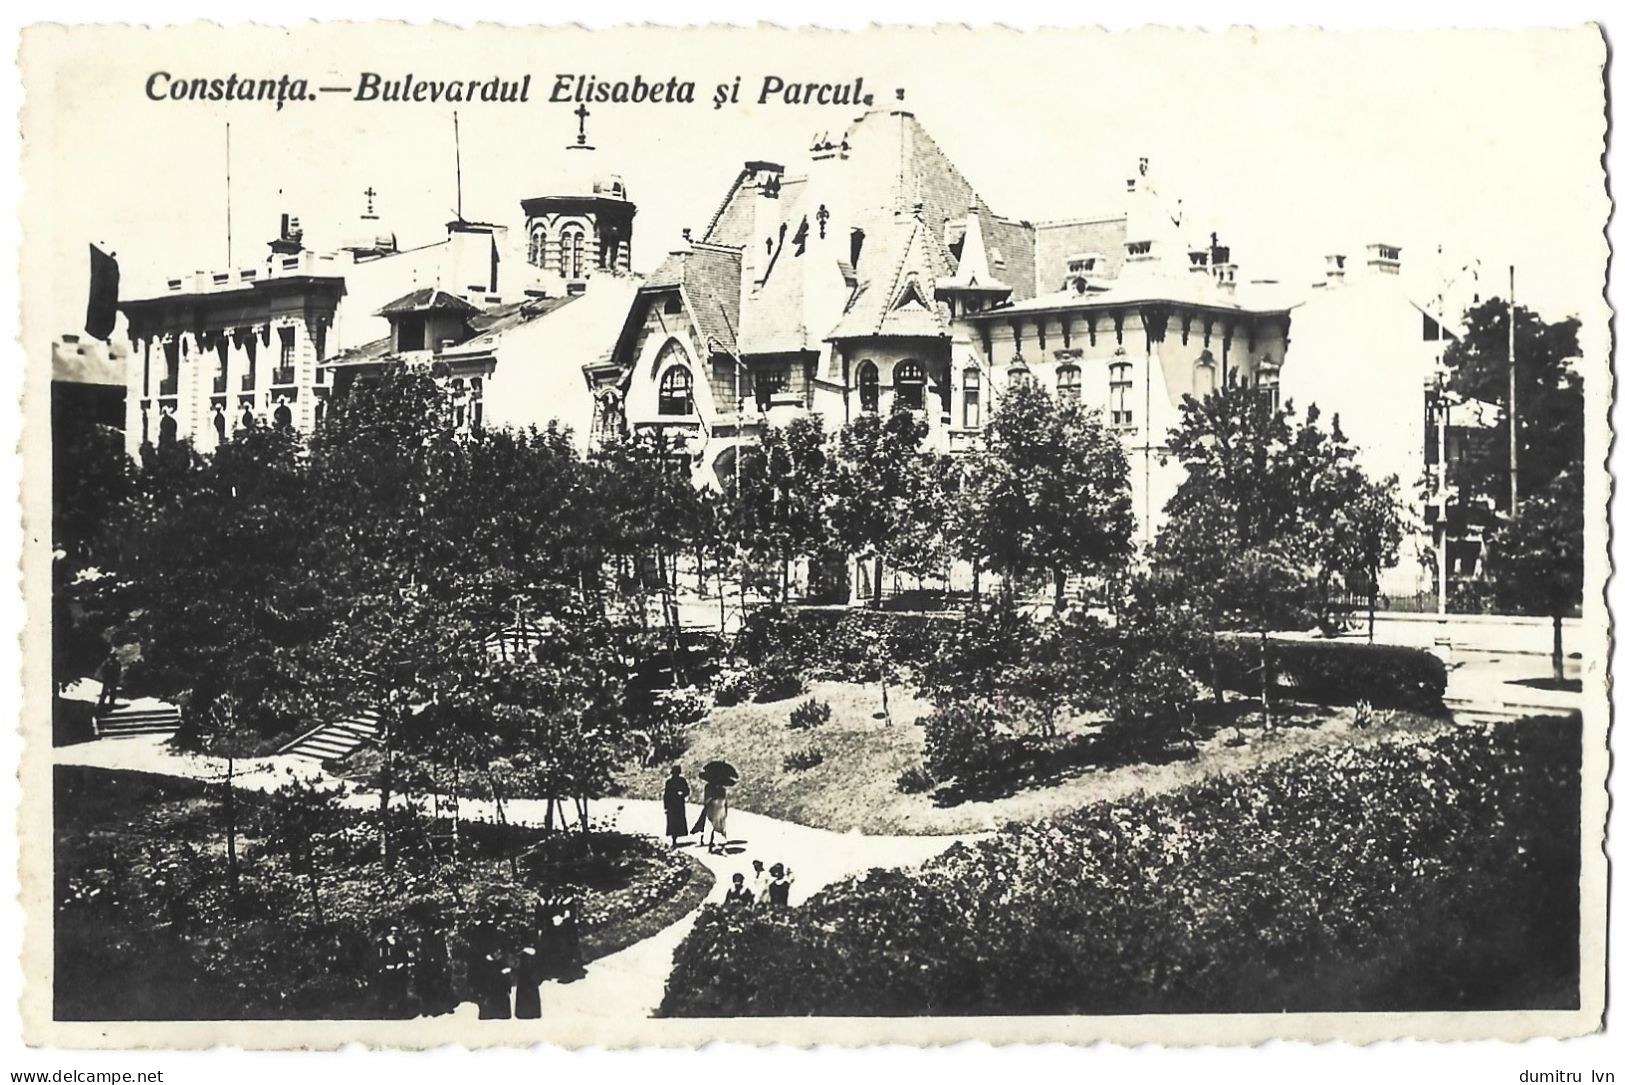 ROMANIA 1936 CONSTANTA - ELISABETA BOULEVARD AND THE PARK, BUILDINGS, ARCHITECTURE, PEOPLE - Roumanie